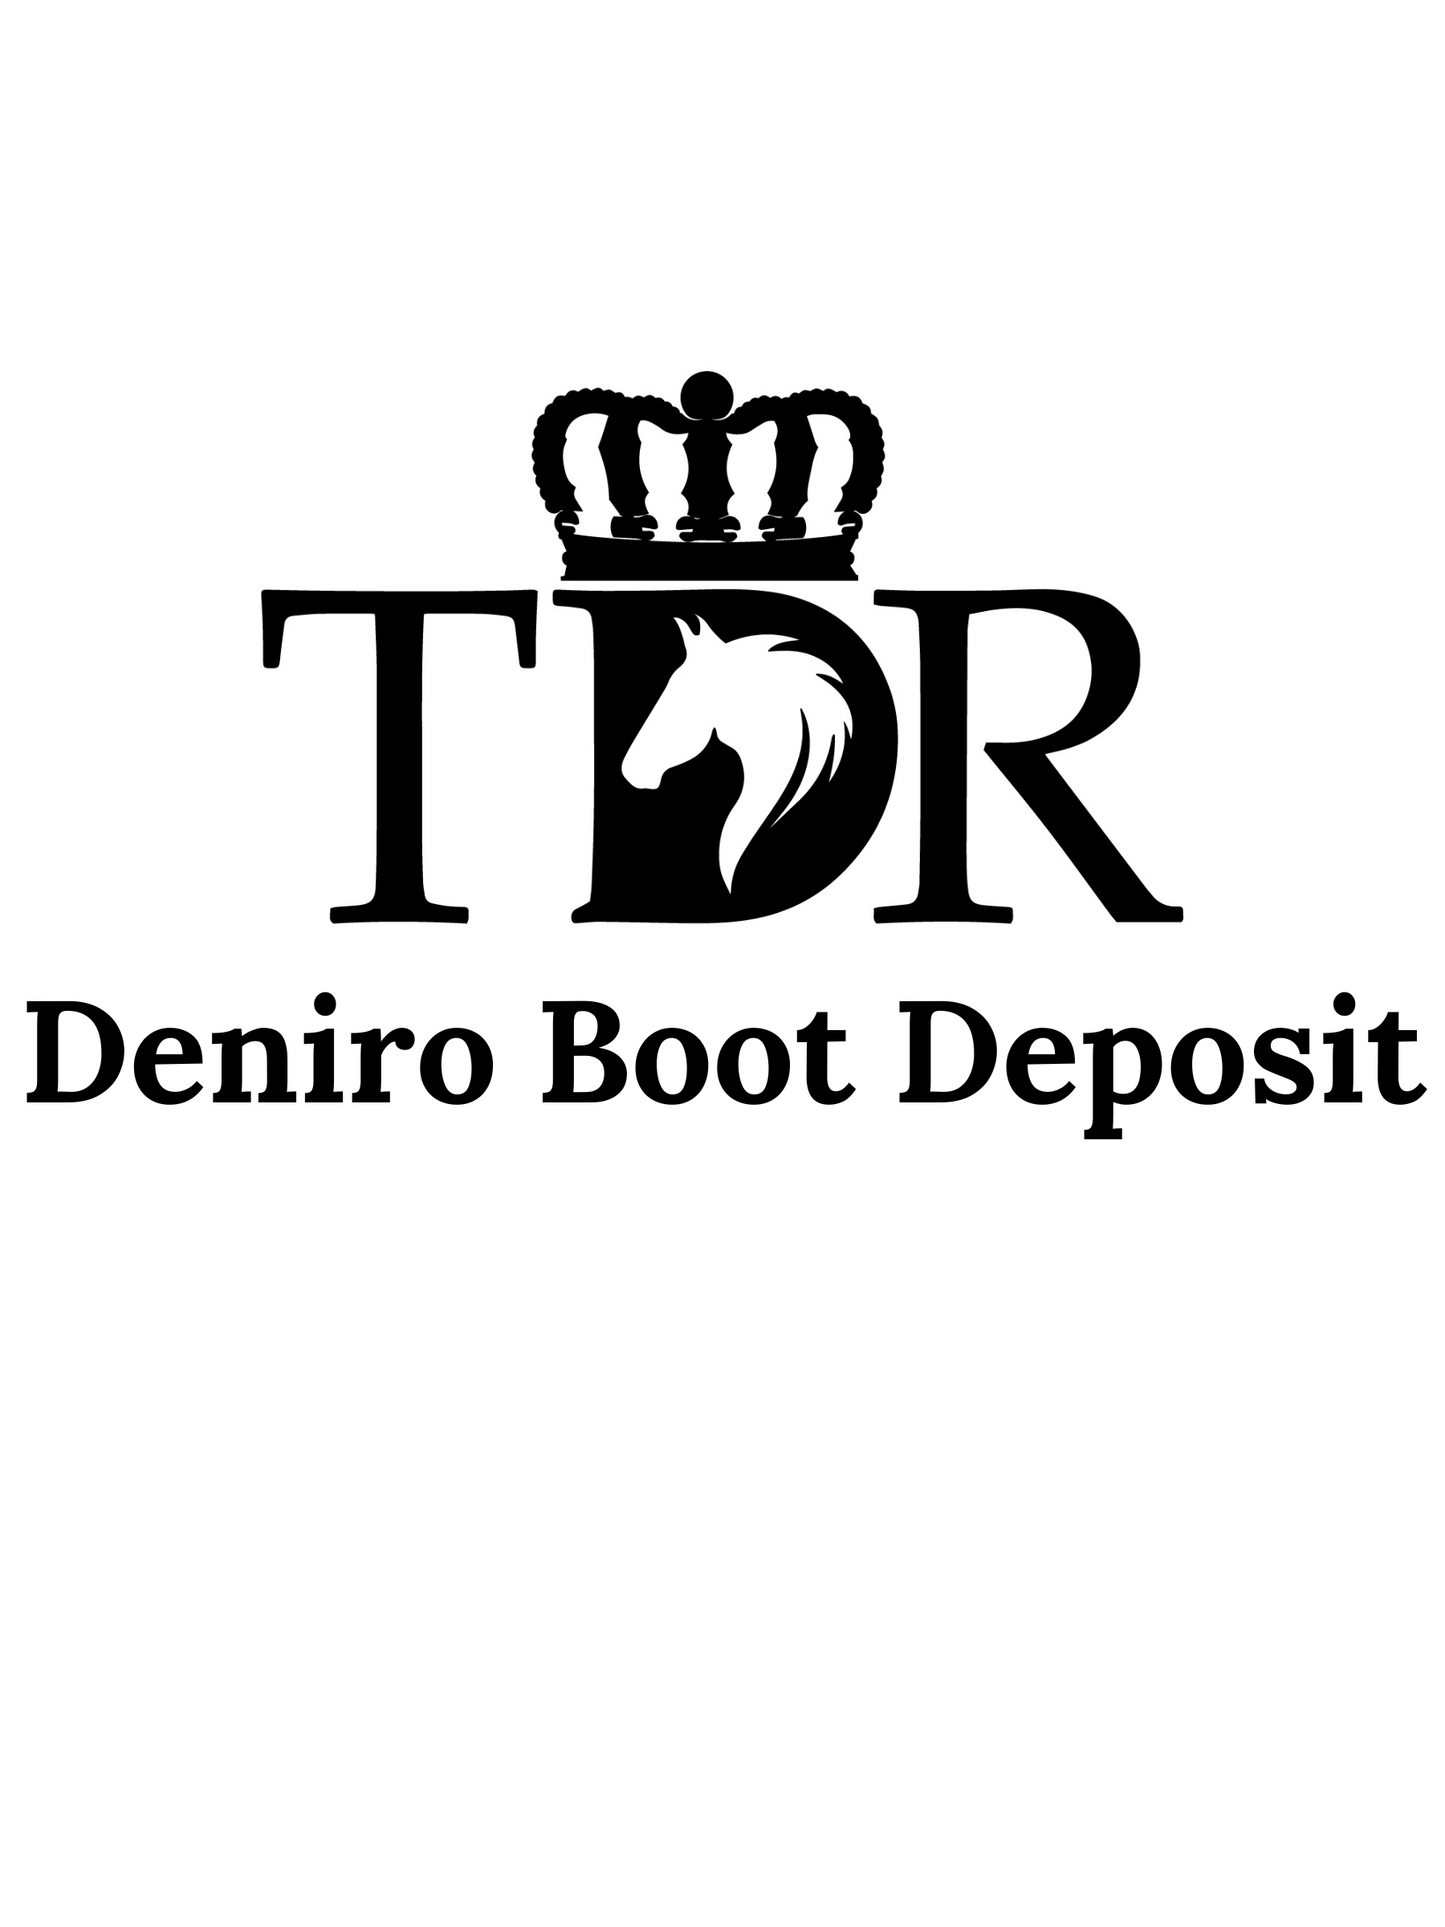 DeNiro Boot Deposit